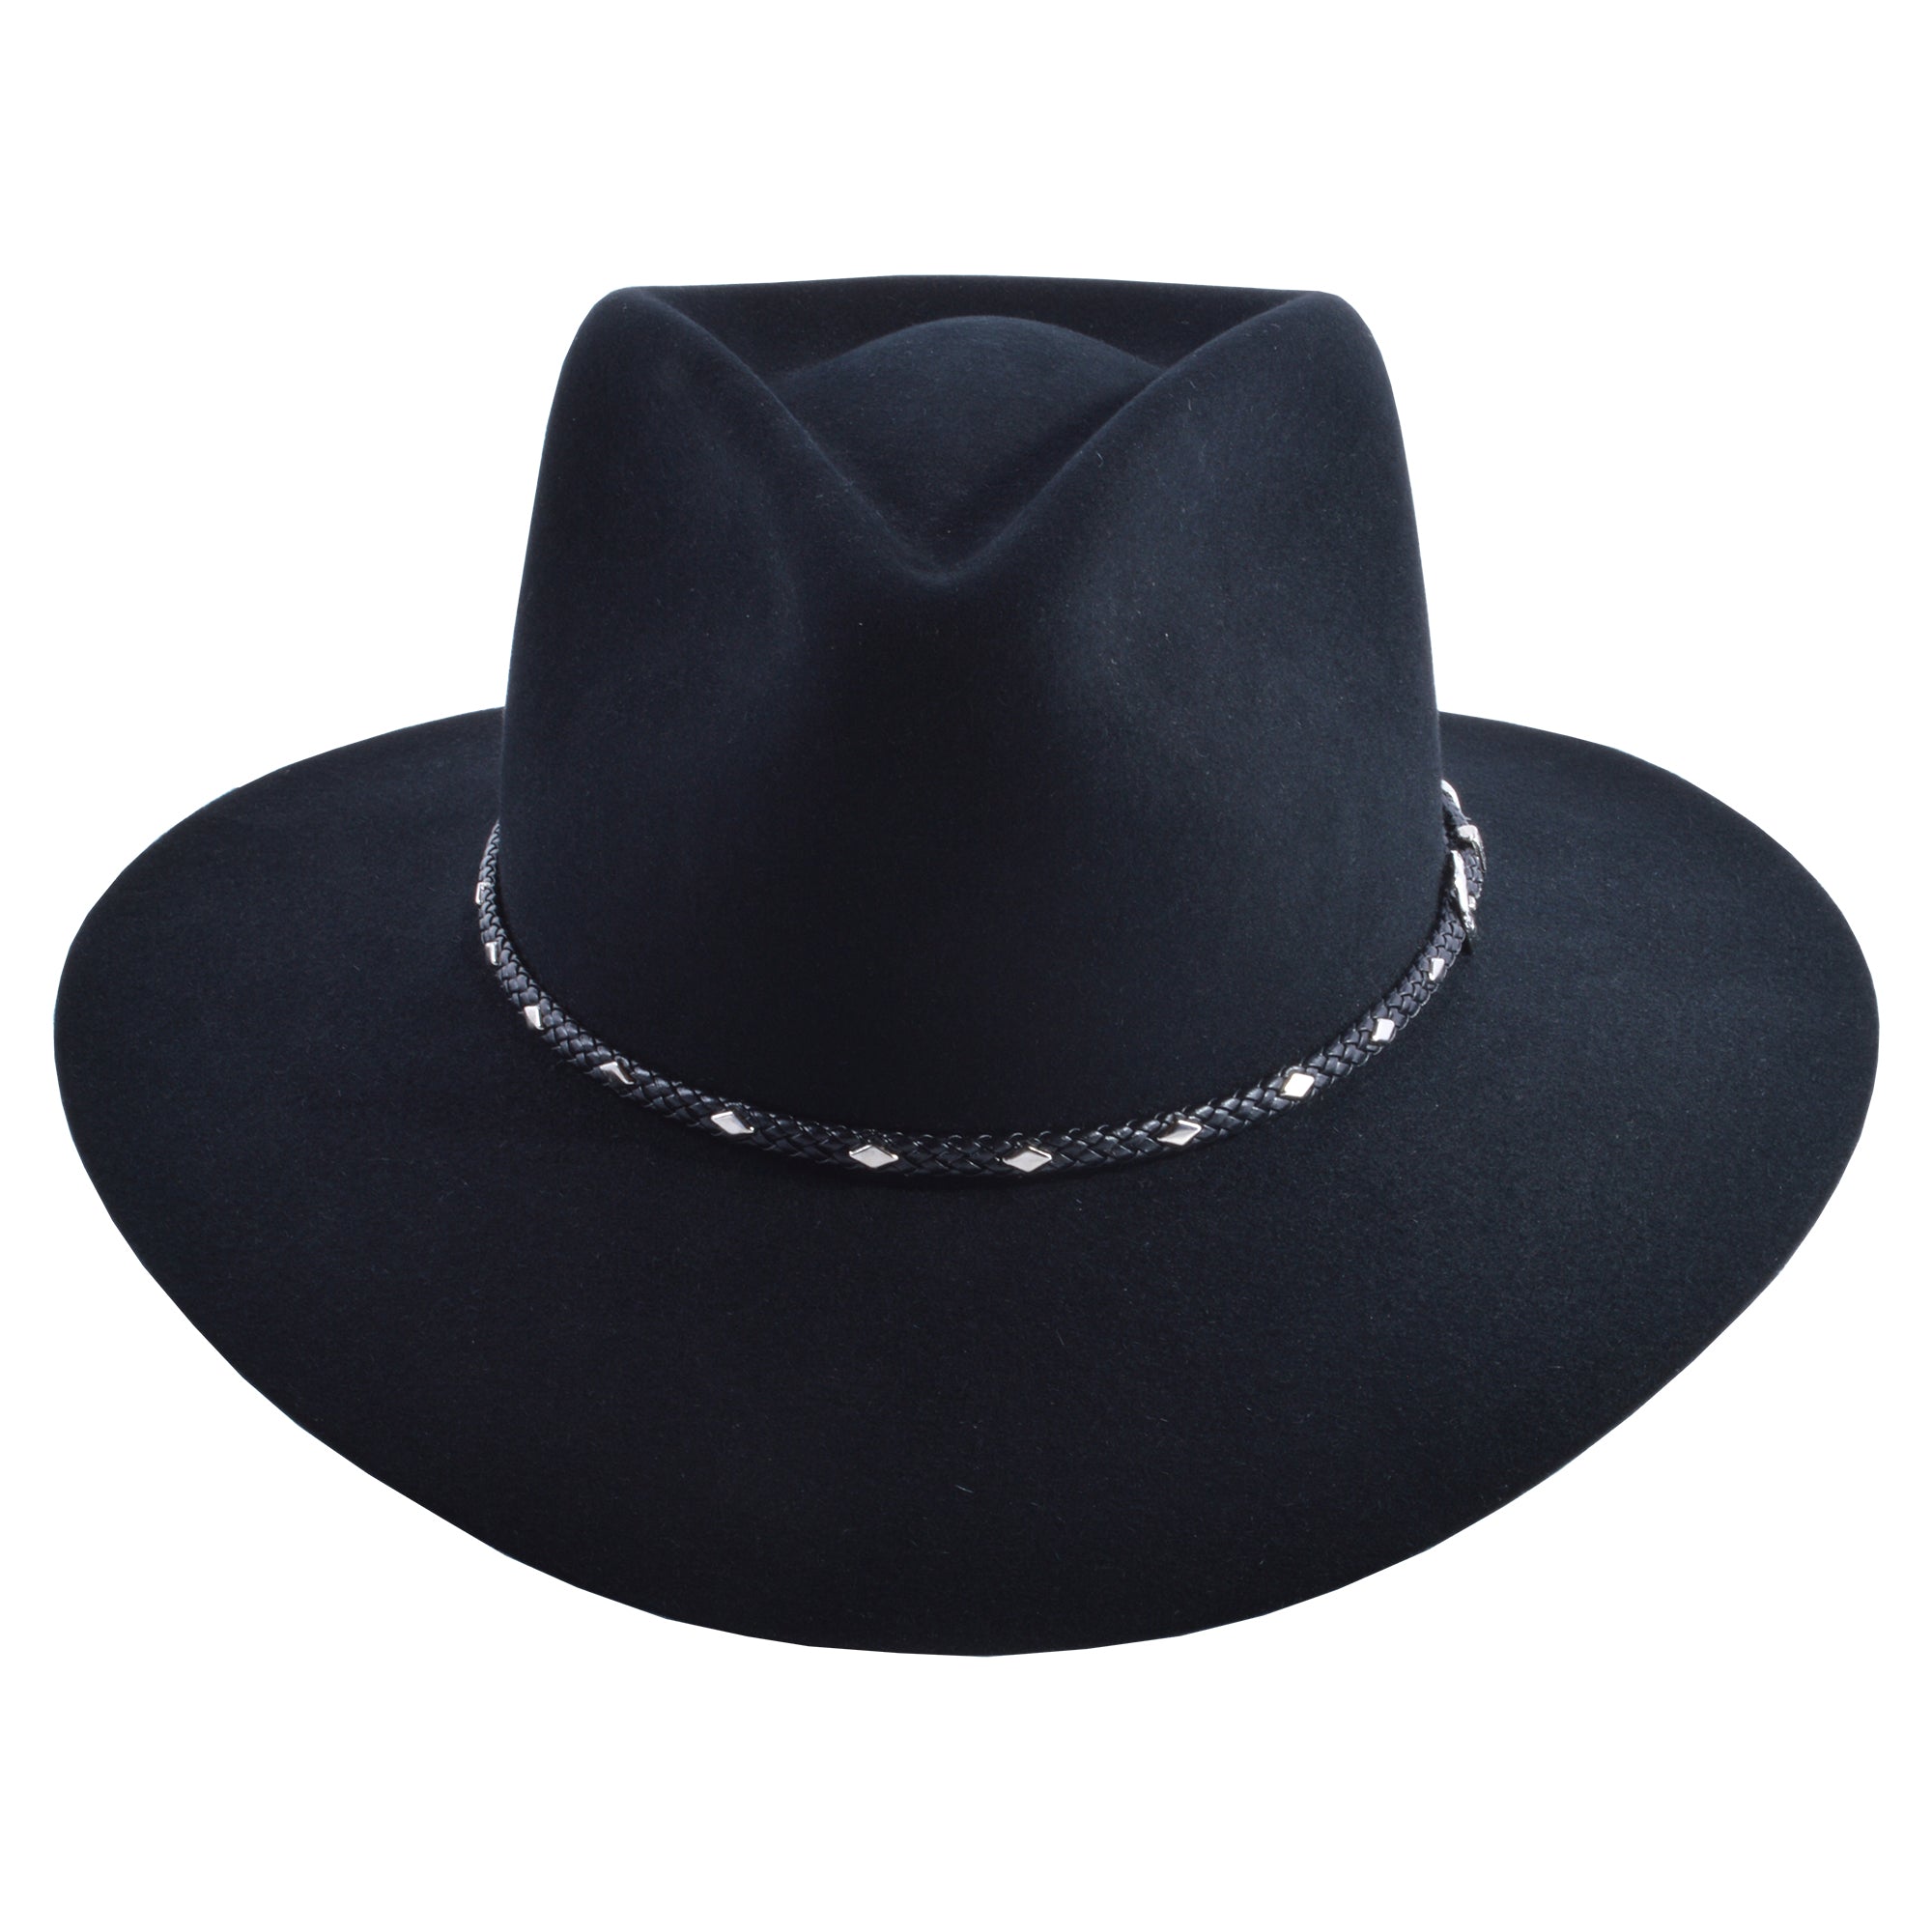 Stetson 5X Fur Felt Diamond Jim Hat with Hat Box